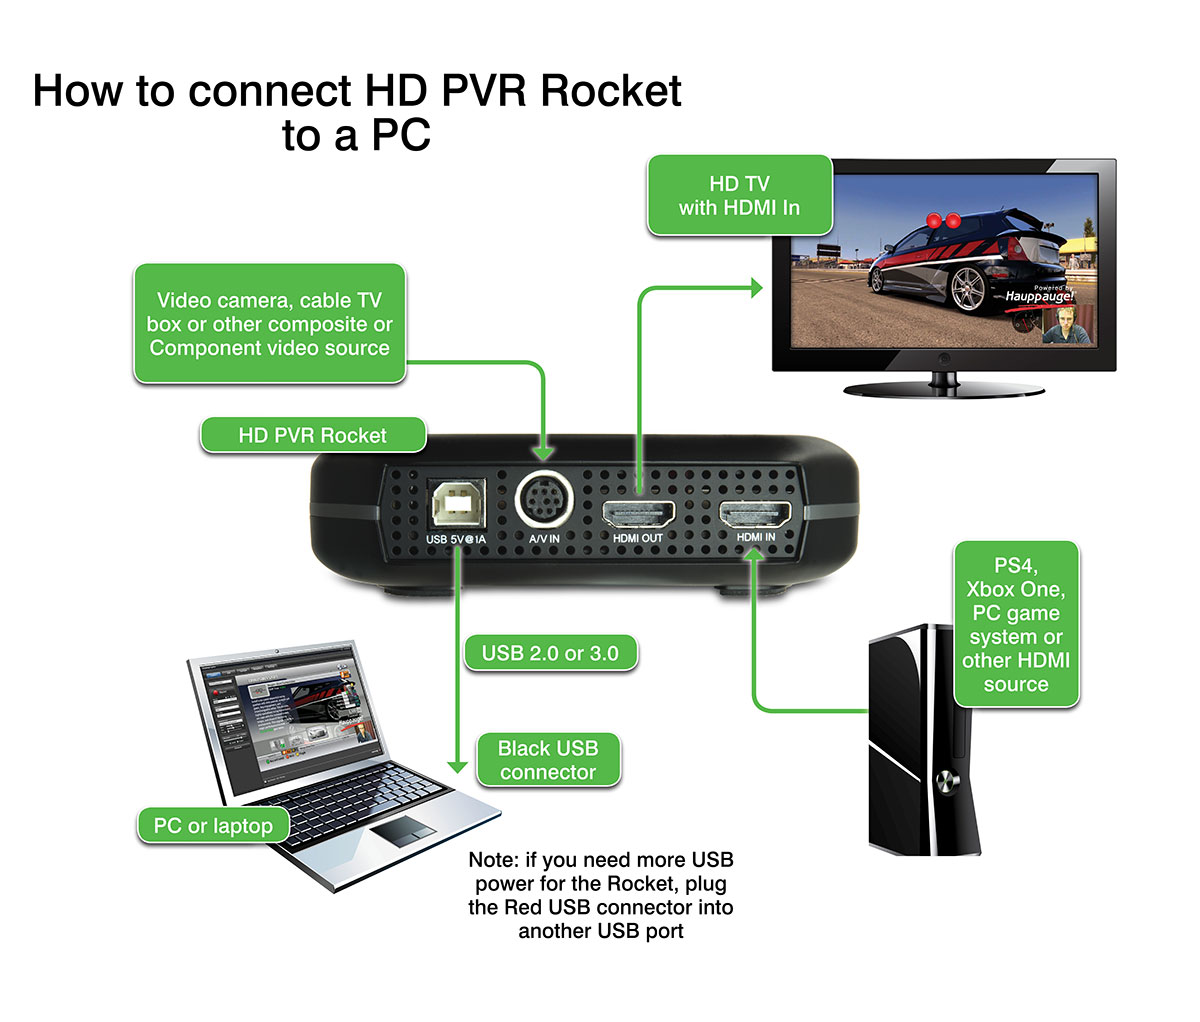 Basic HD PVR Rocket Connection